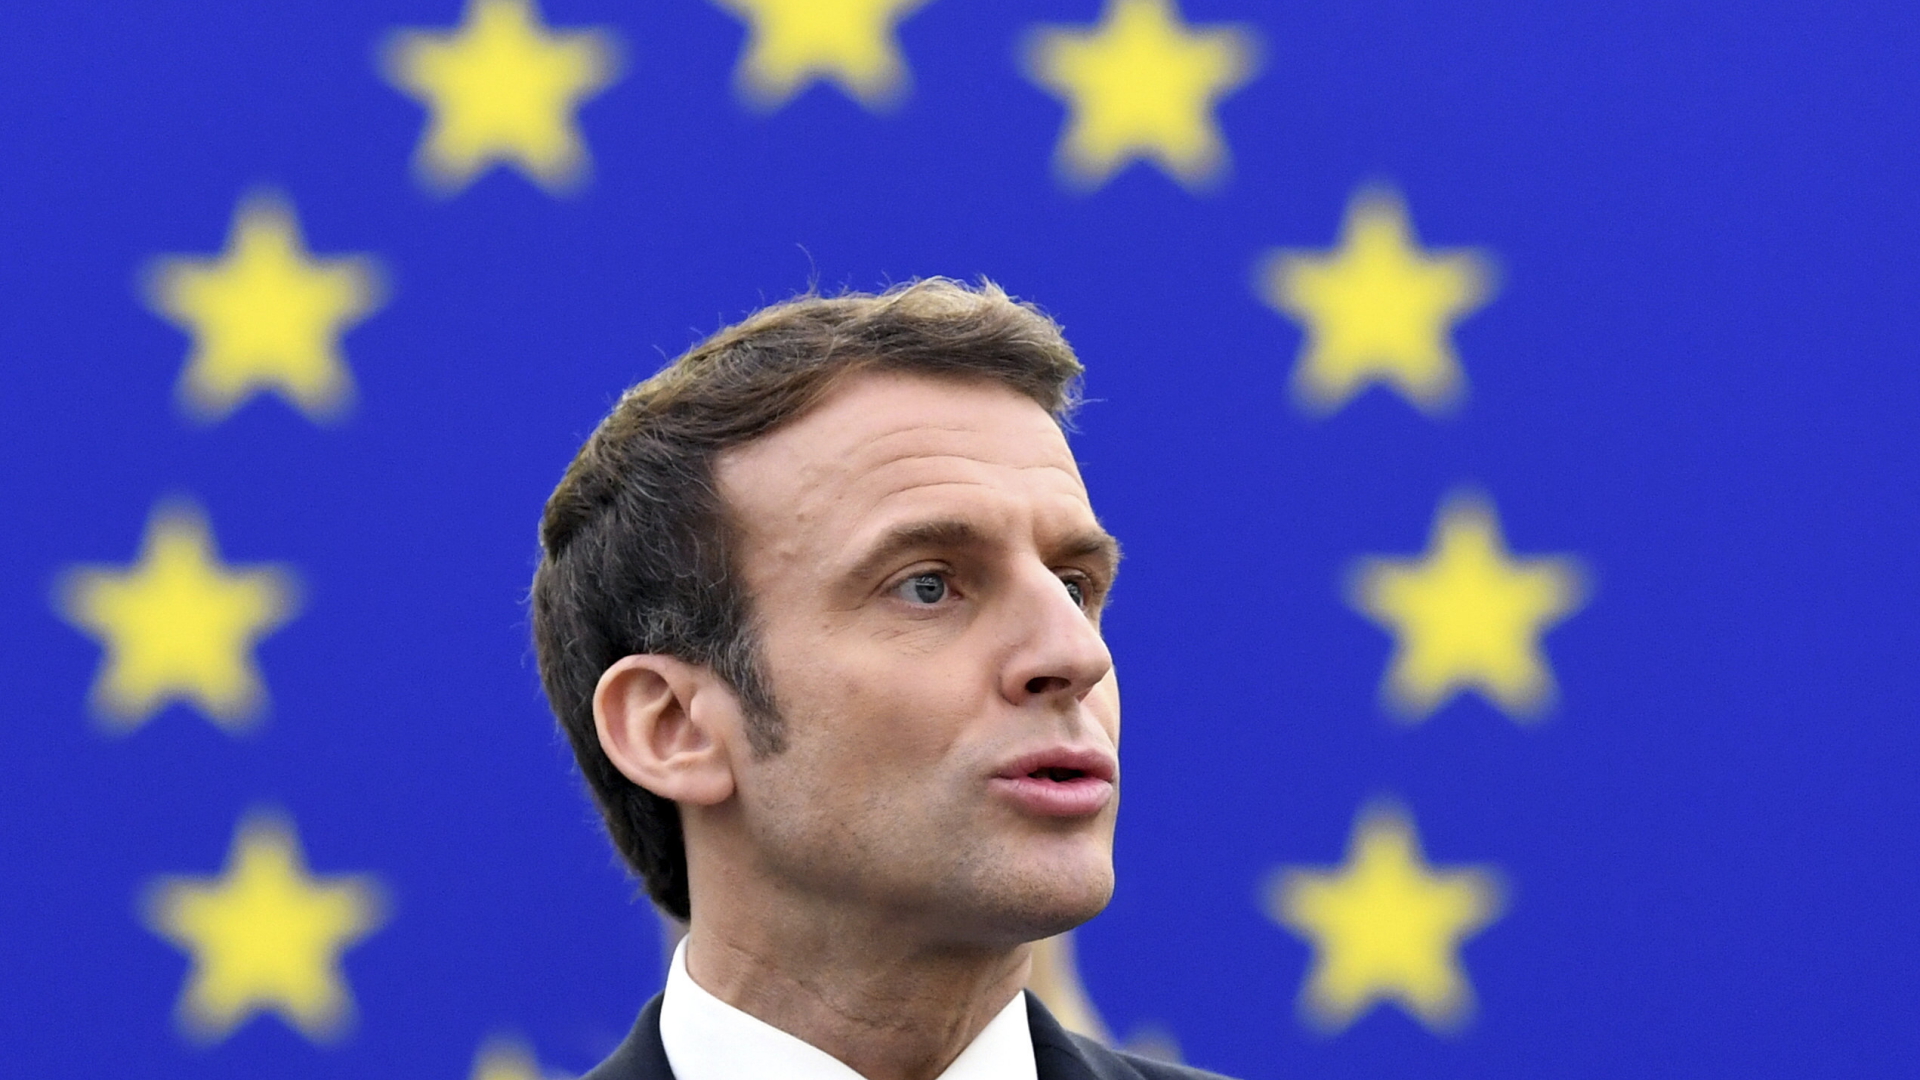 Frankreichs Präsident Emmanuel Macron vor den Sternen der EU-Flagge